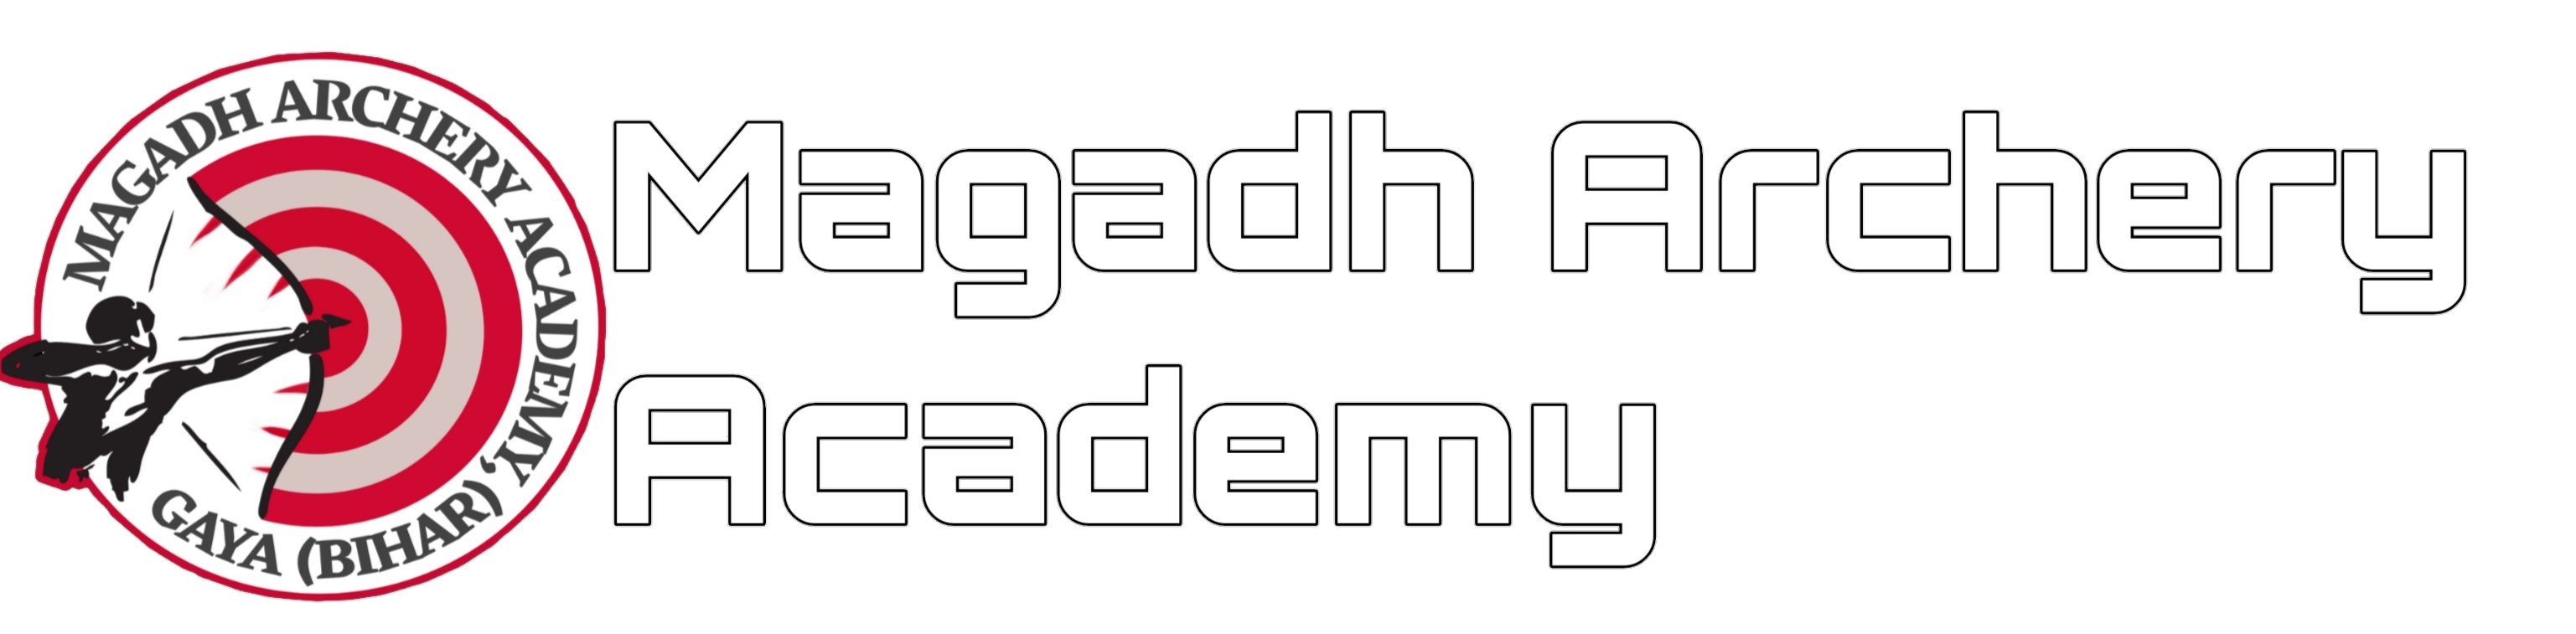 magadh archery logo